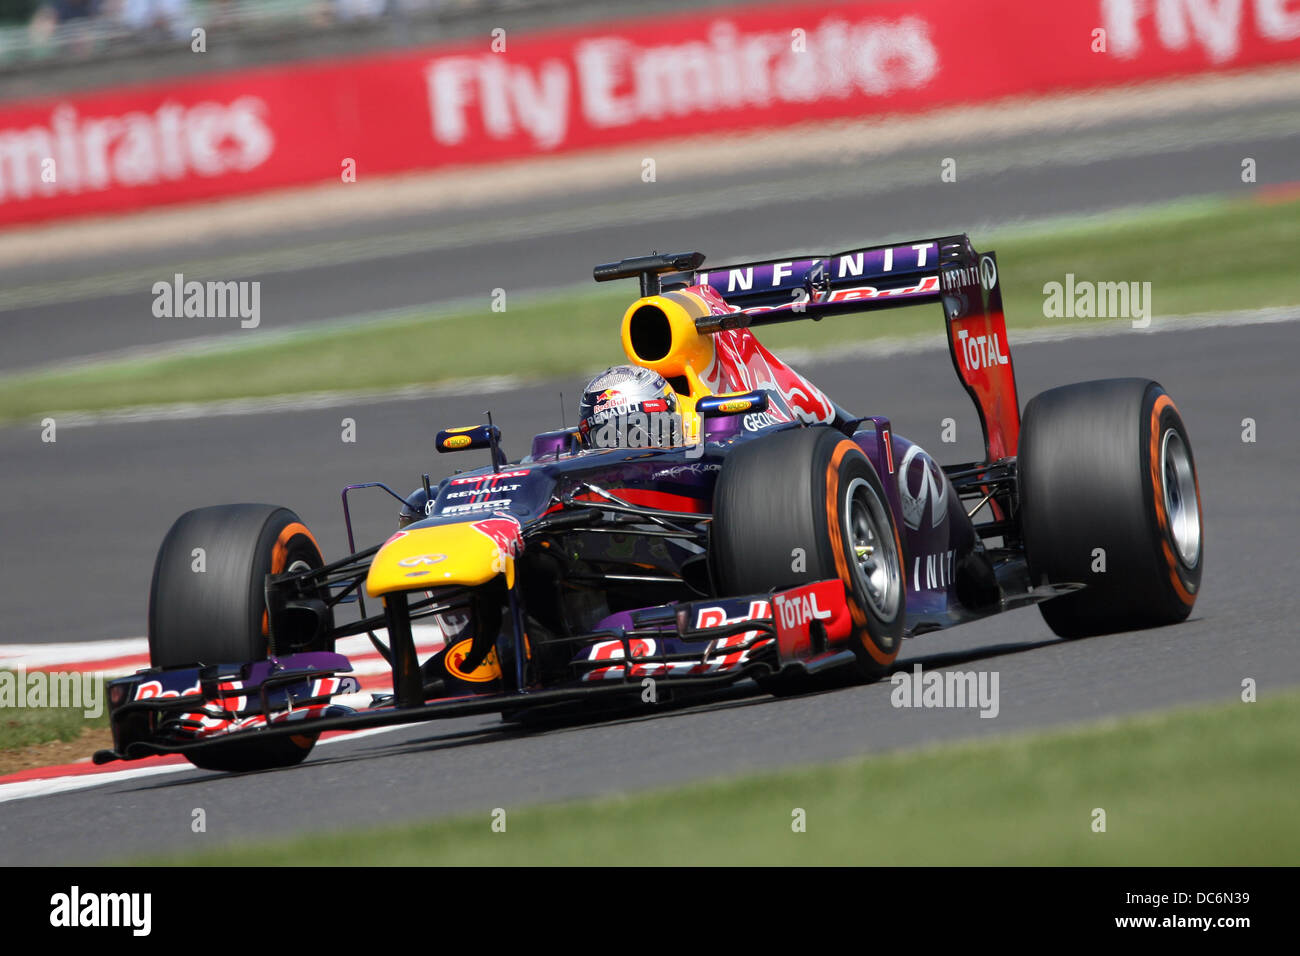 Sebastian Vettel, Red Bull Racing at the 2013 F1 British Grand Prix, Silverstone. Stock Photo